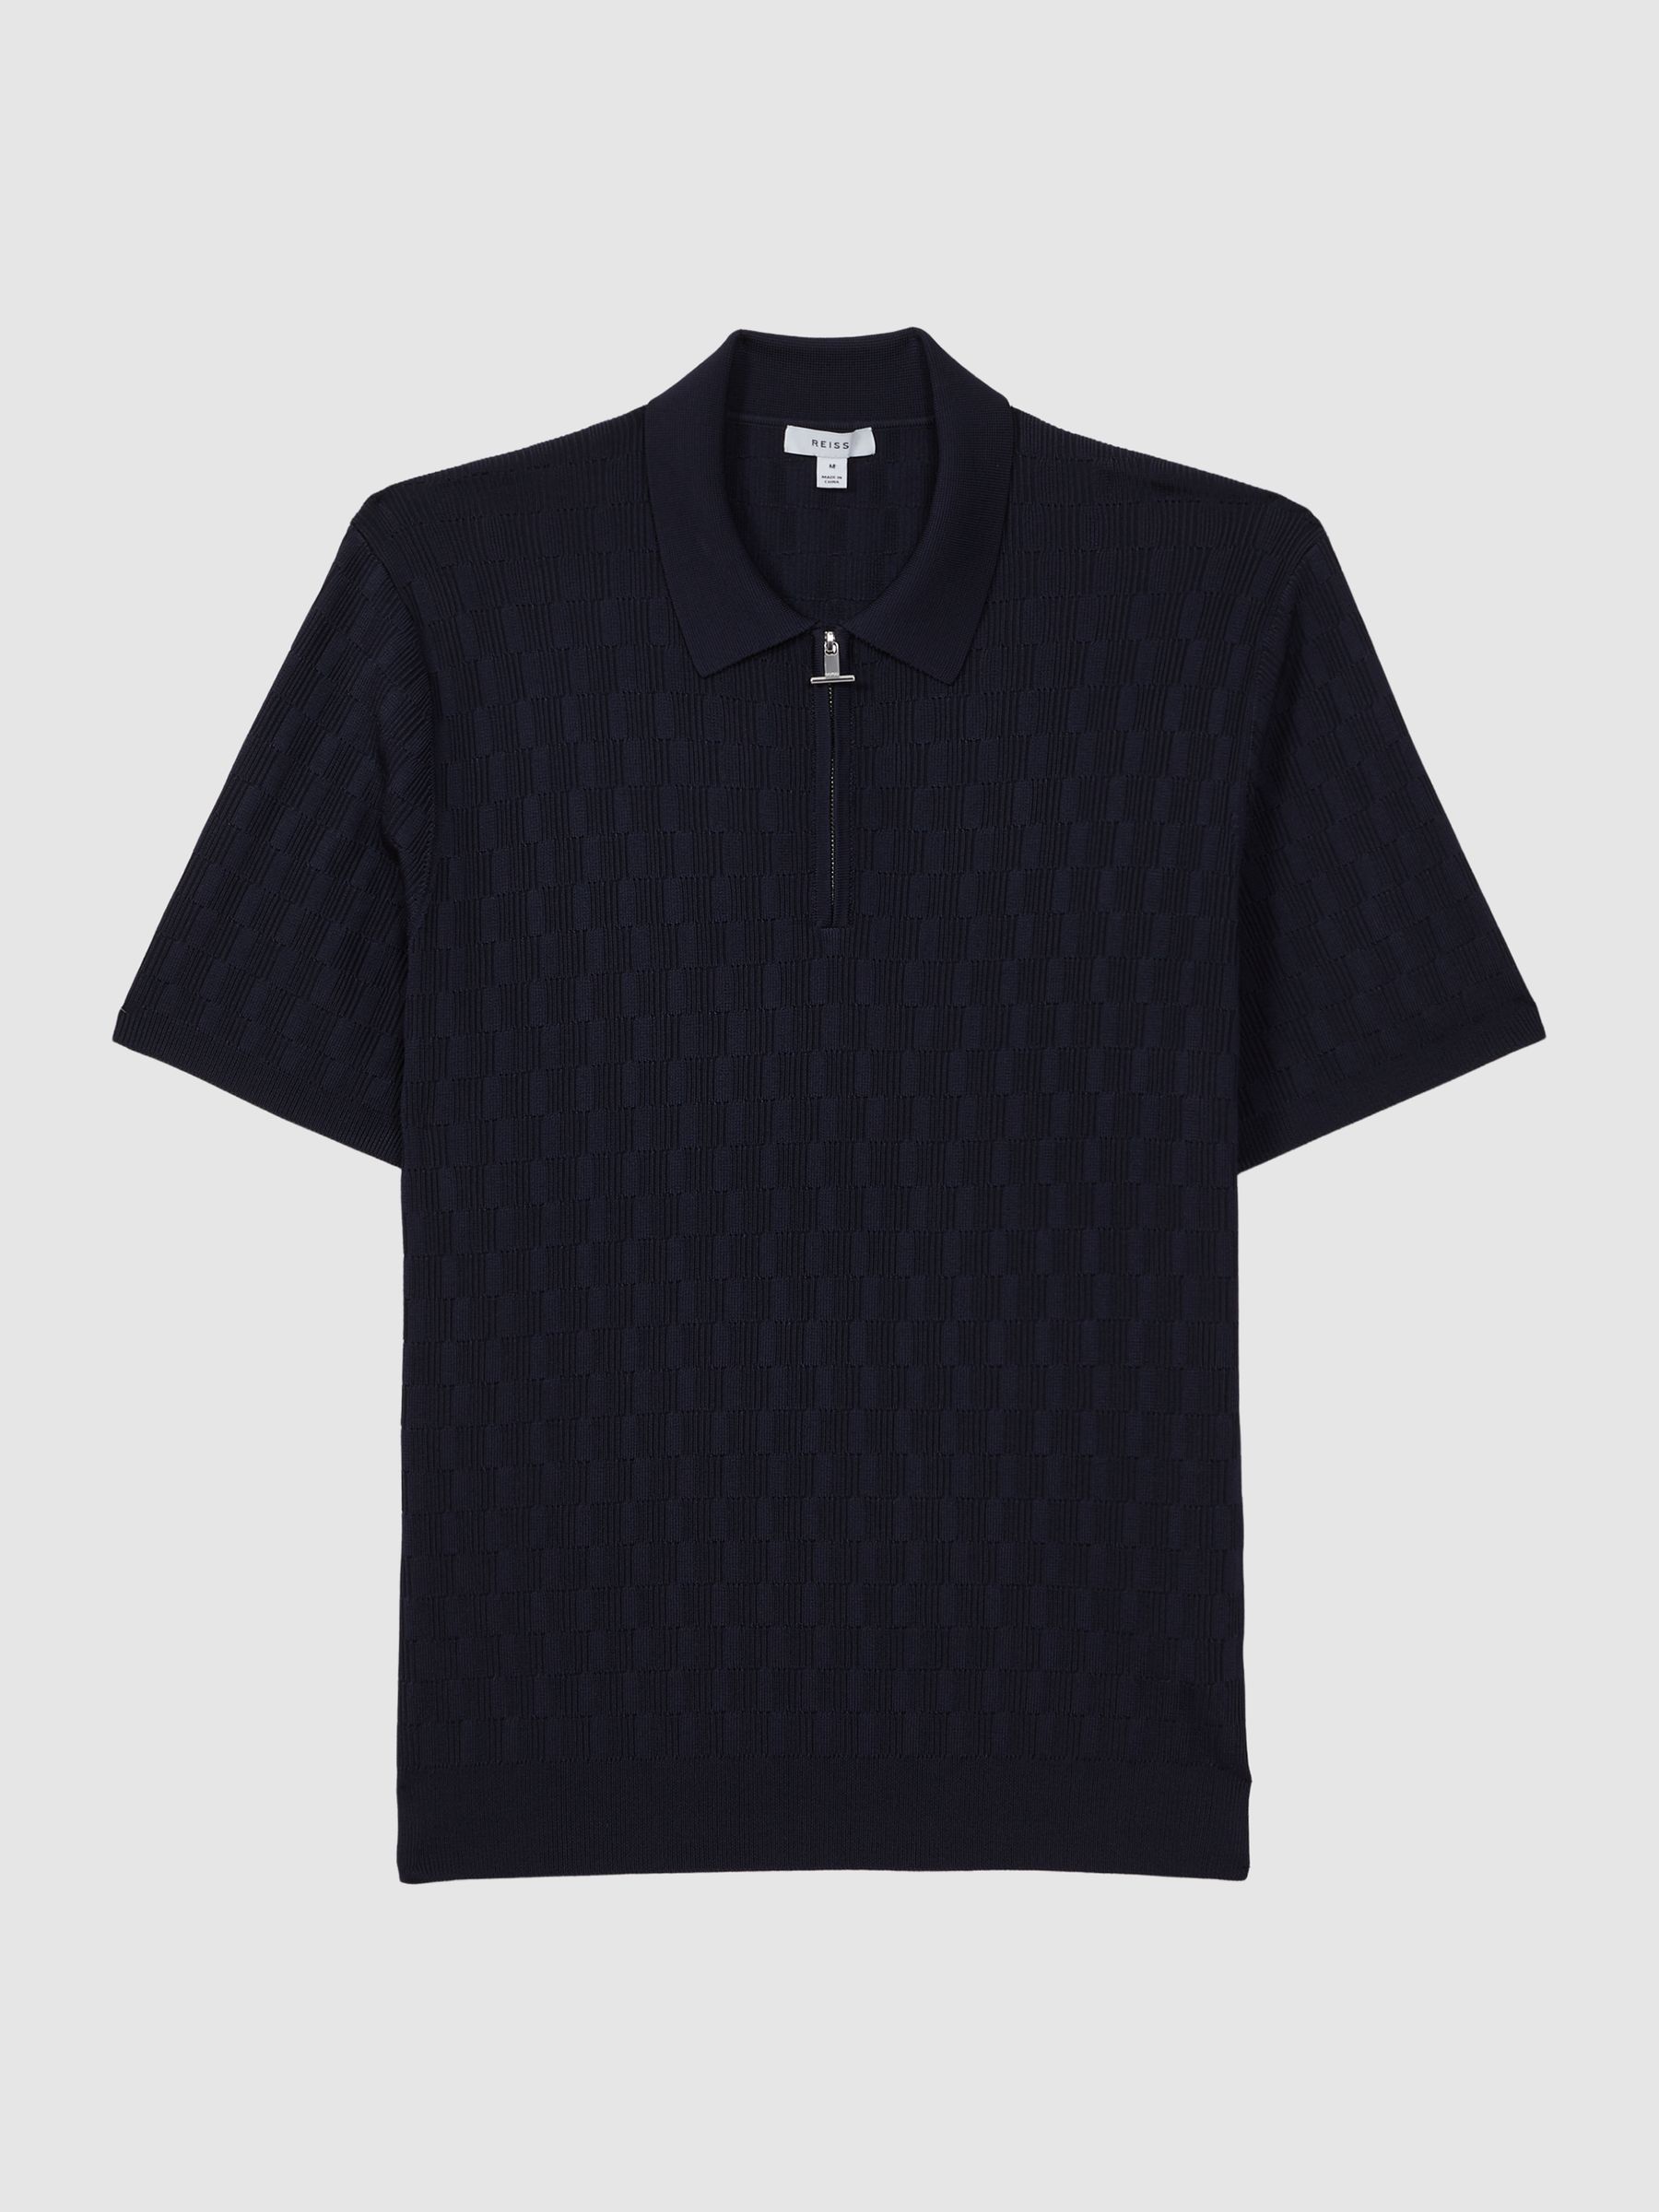 Reiss Ubud Half-Zip Textured Polo T-Shirt | REISS Australia